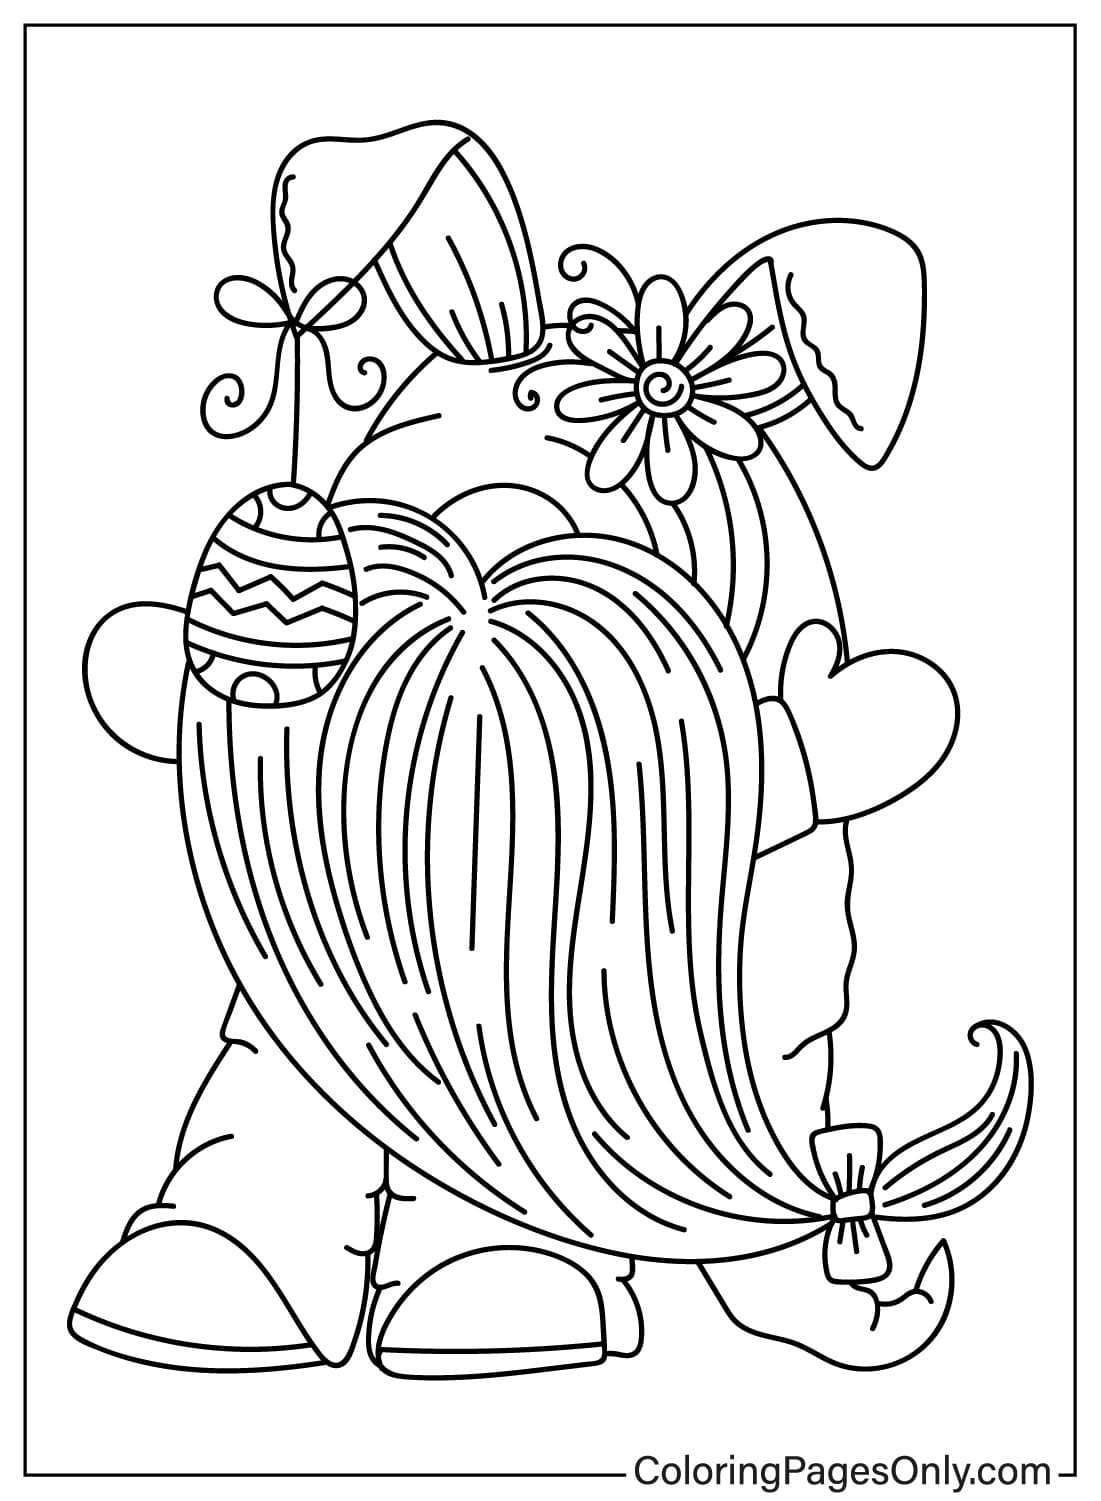 Цветная страница пасхального гнома из «Пасхального гнома»